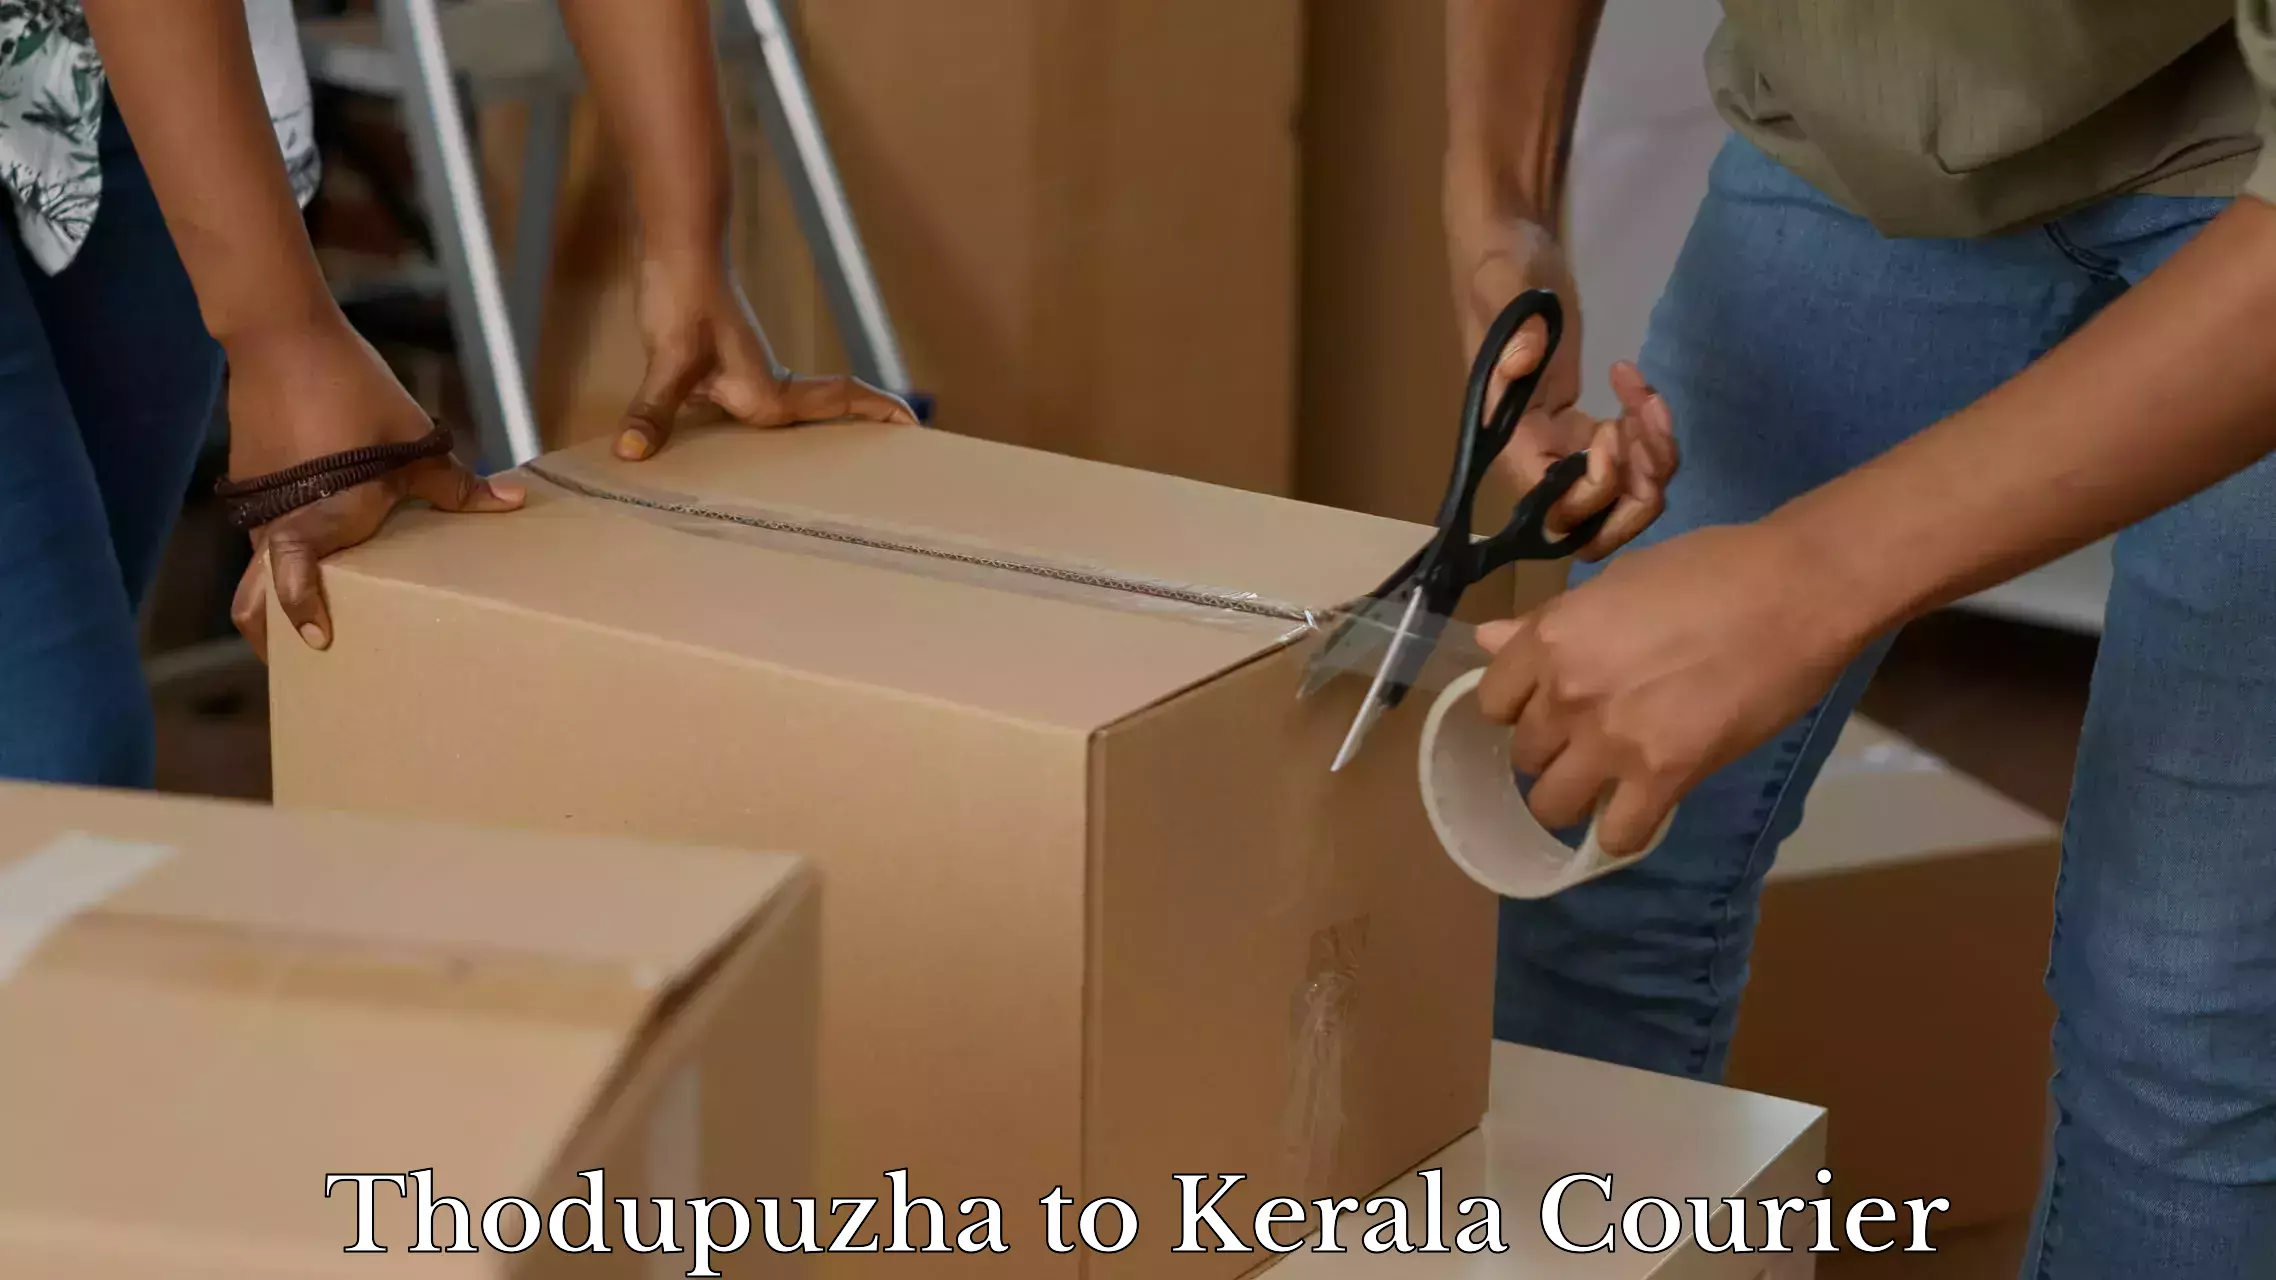 Luggage shipment specialists Thodupuzha to Kerala